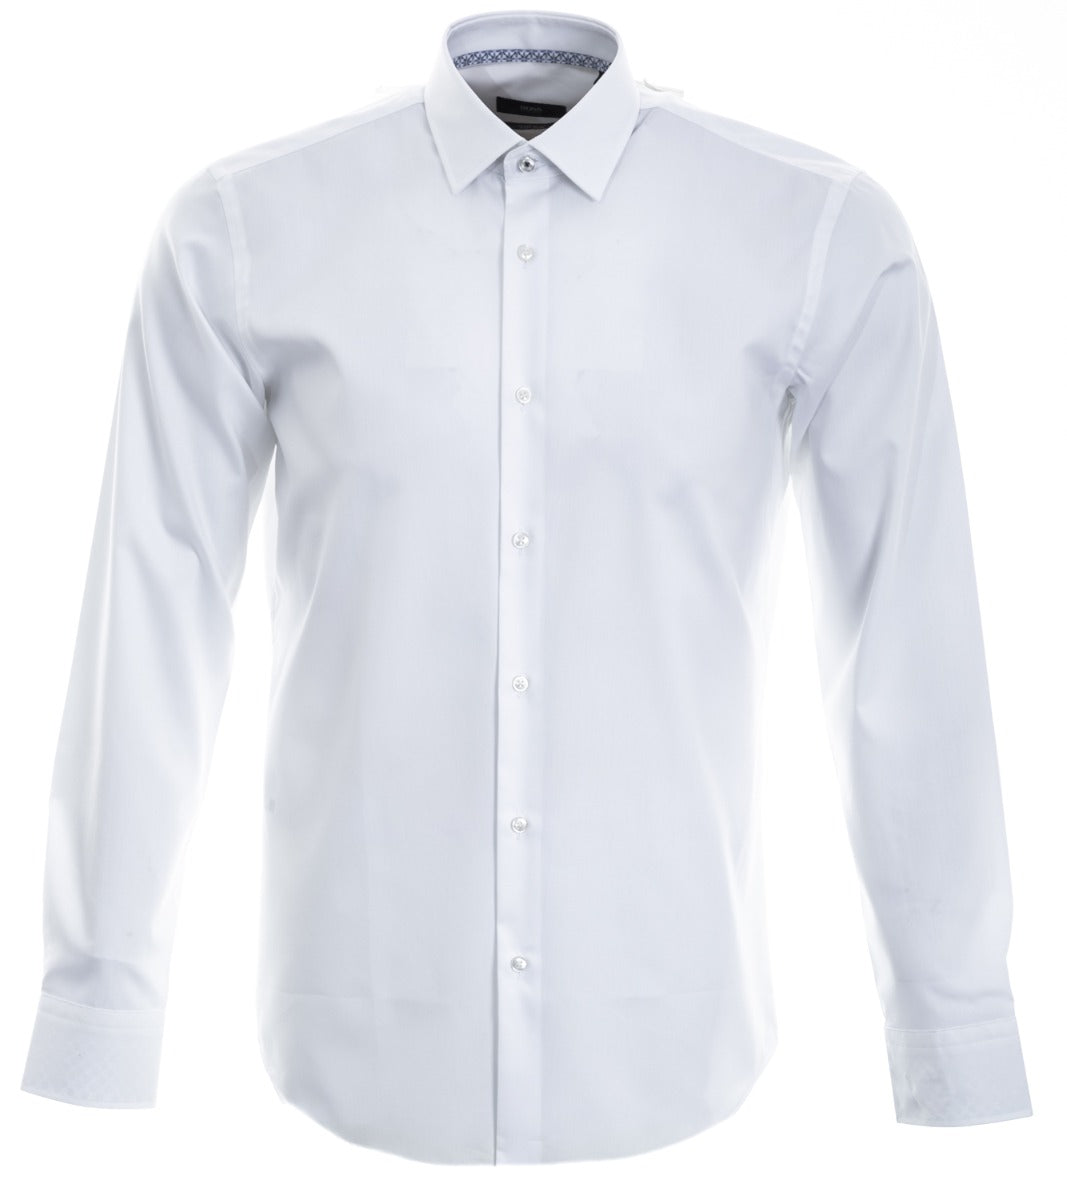 Boss Gelson Shirt in White Main